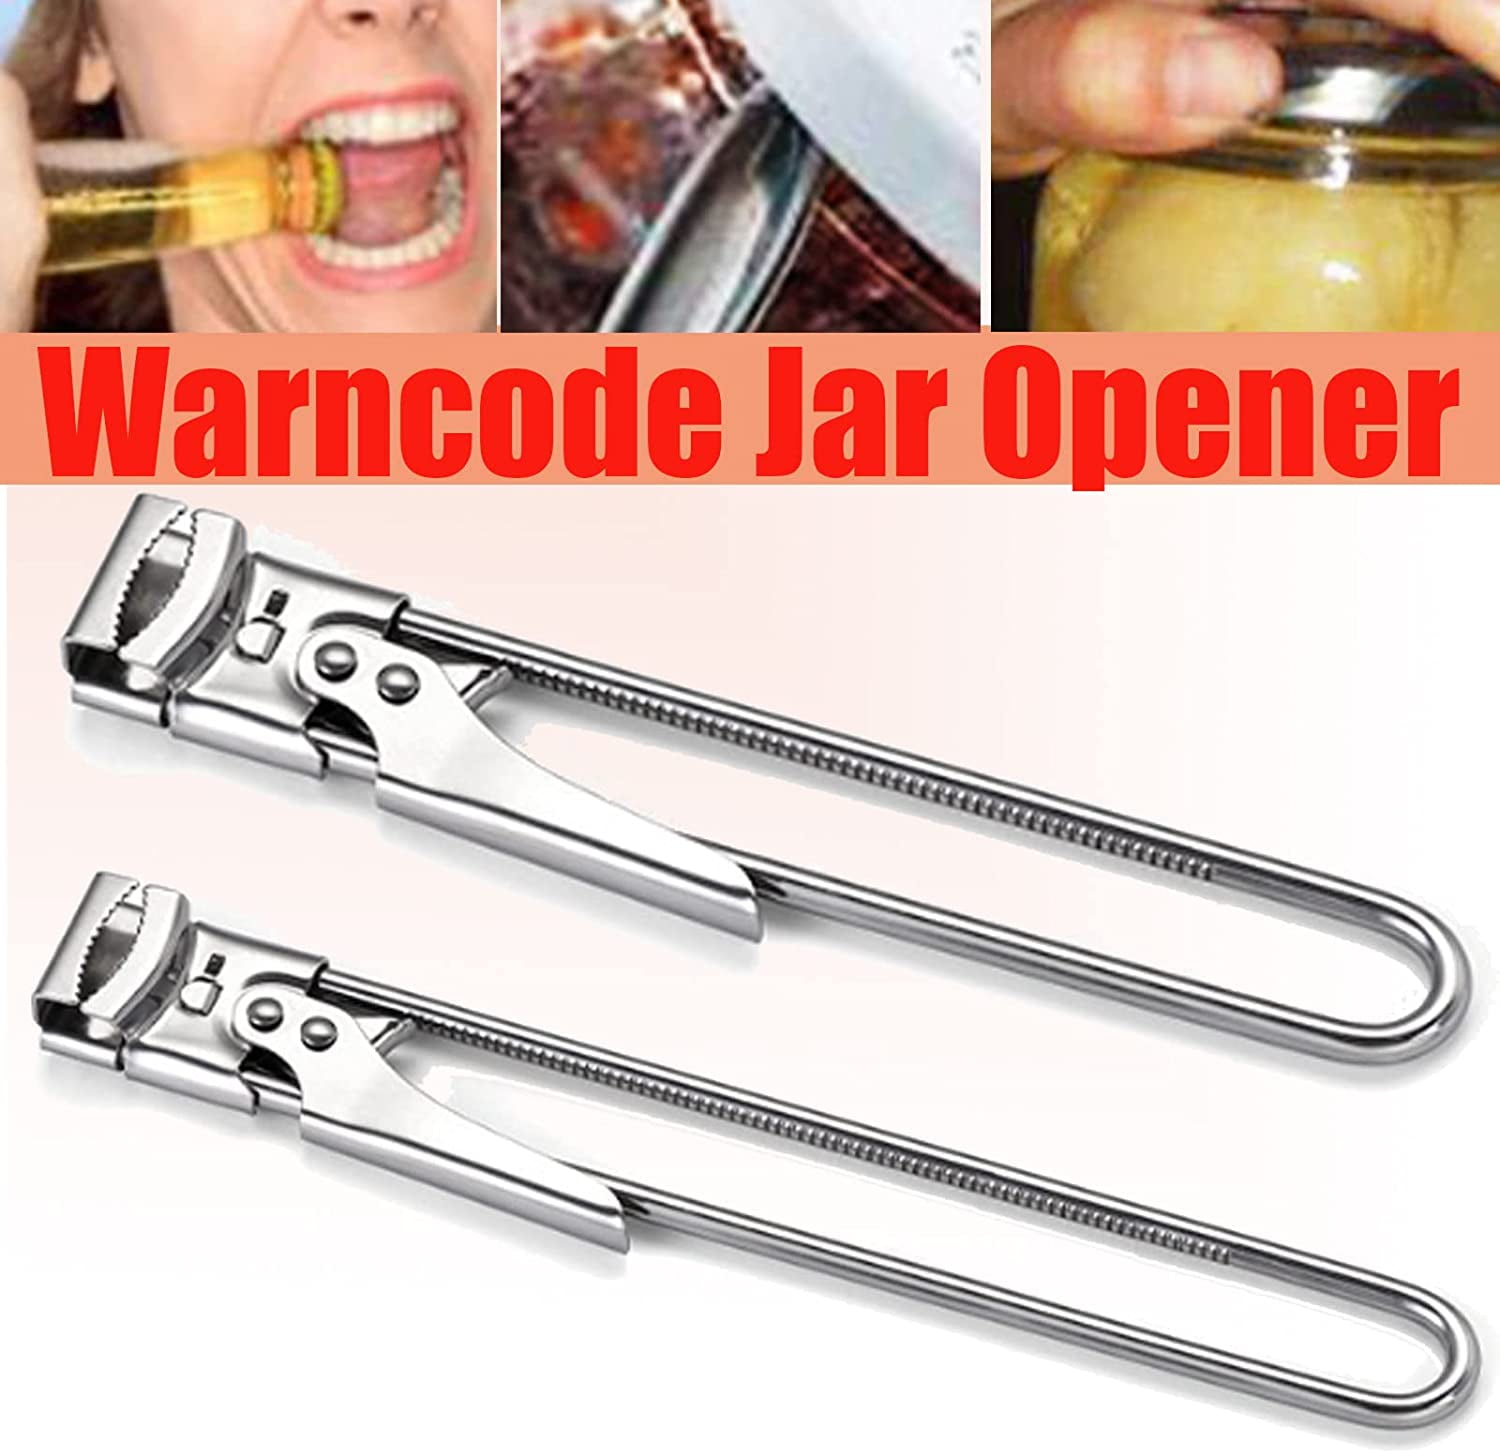 Warncode Jar Opener, Fullofcarts Jar Opener, Adjustable Multifunctional Stainless Steel Can Opener Jar Lid Gripper Kitchen (2pcs)